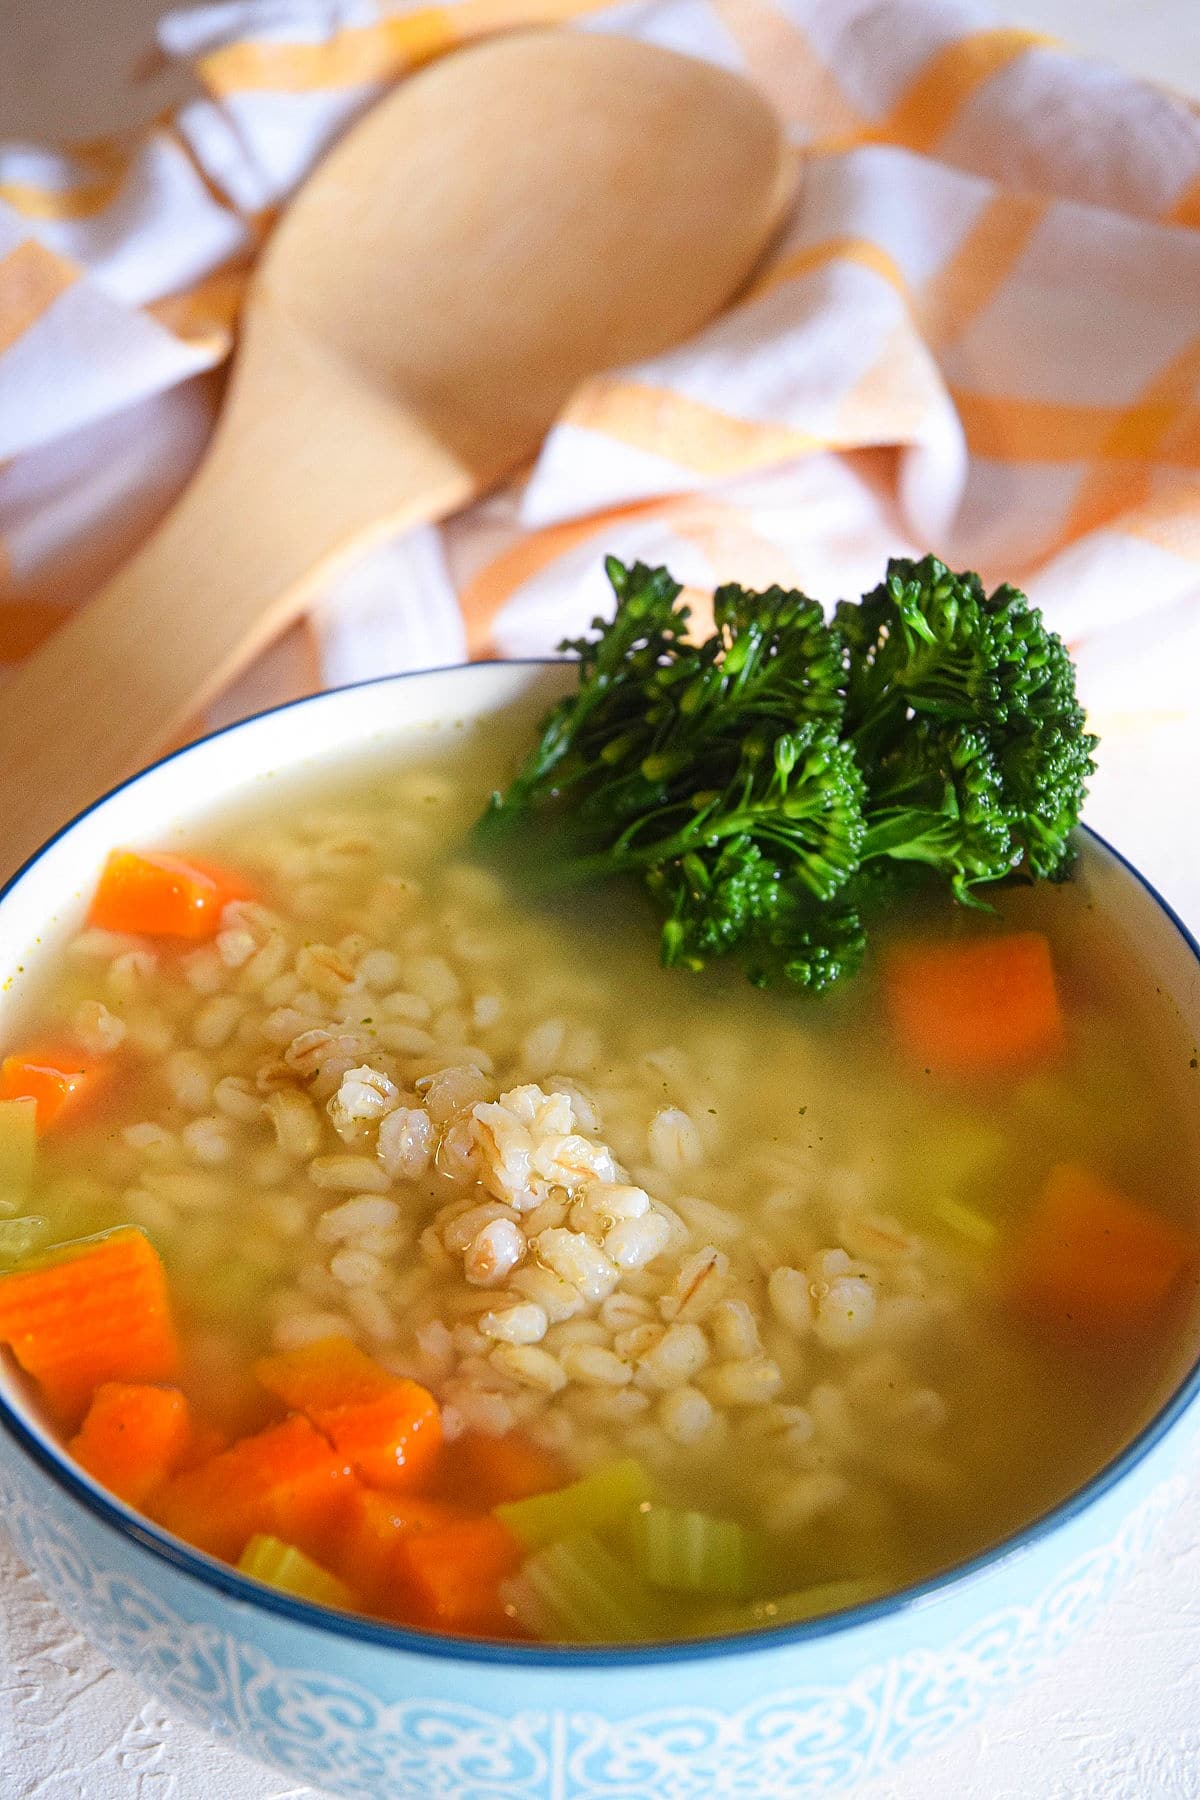 Pearl barley soup in bowl.